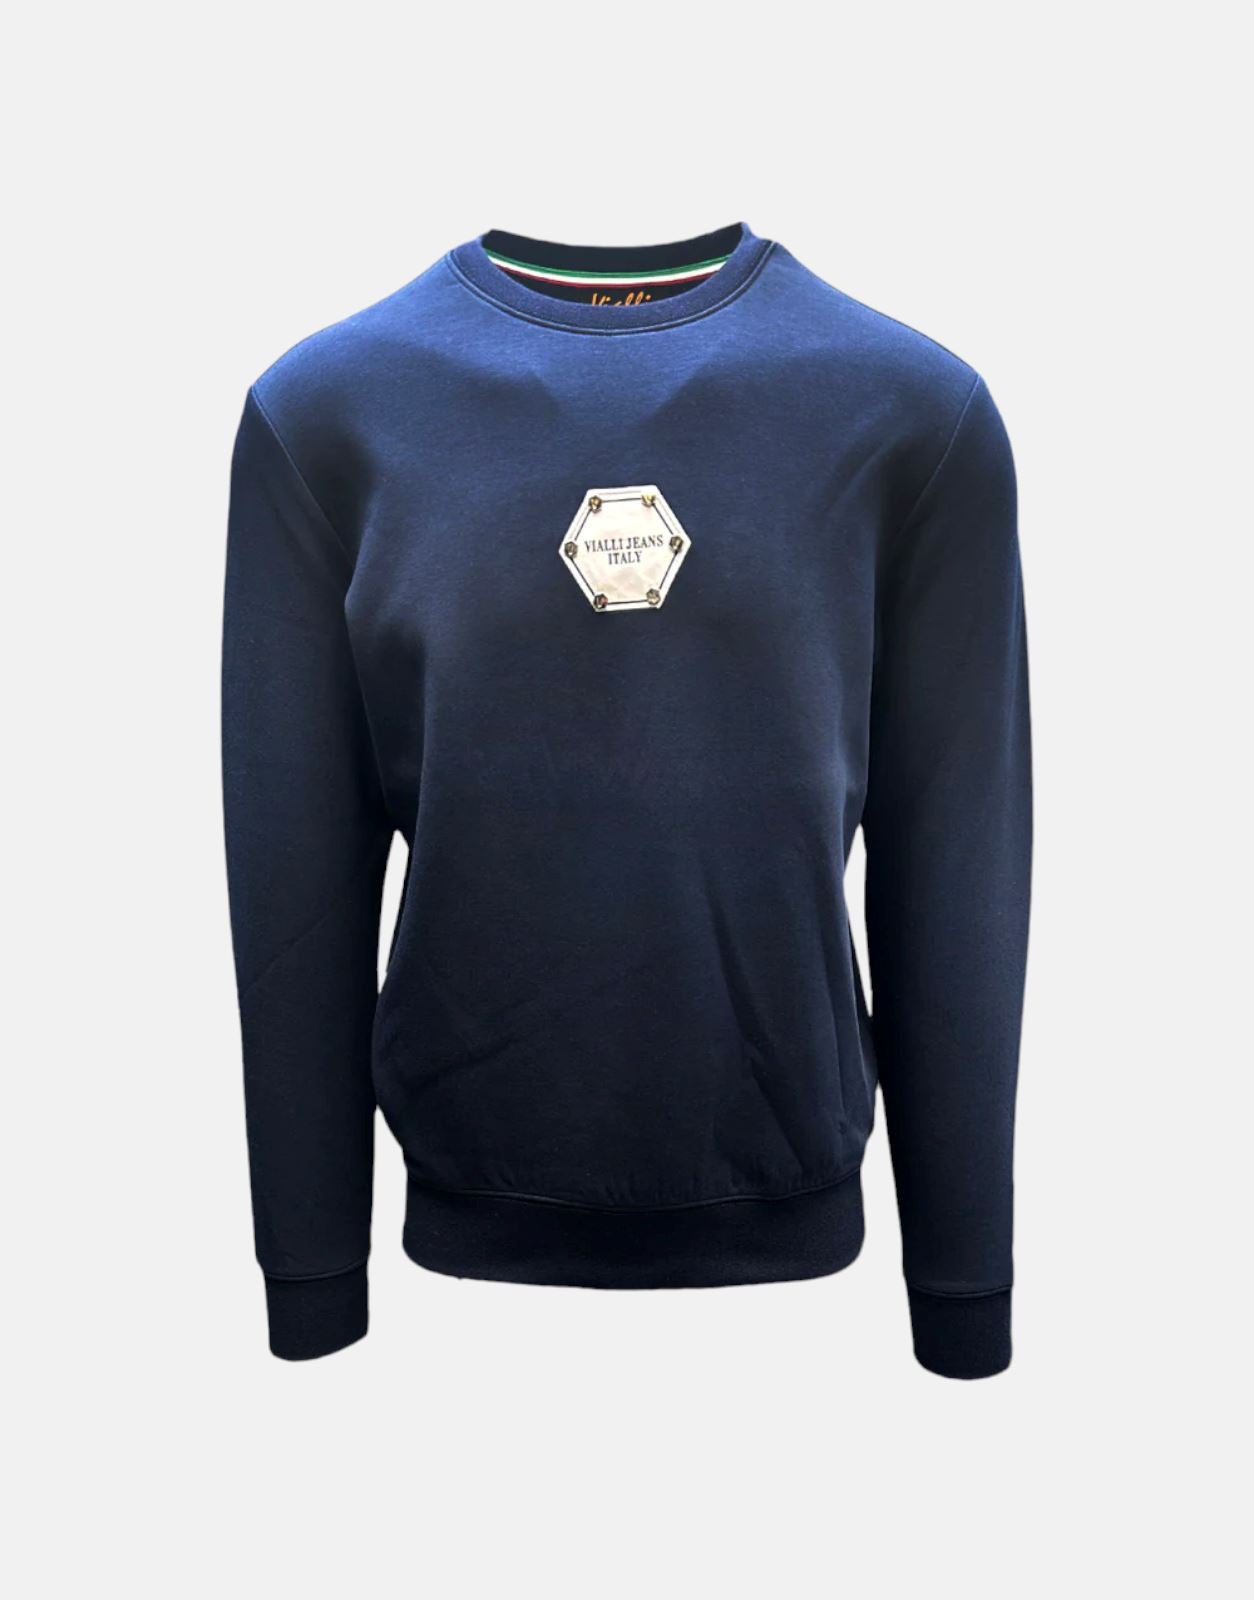 Vialli Grands Navy Sweatshirt - Subwear